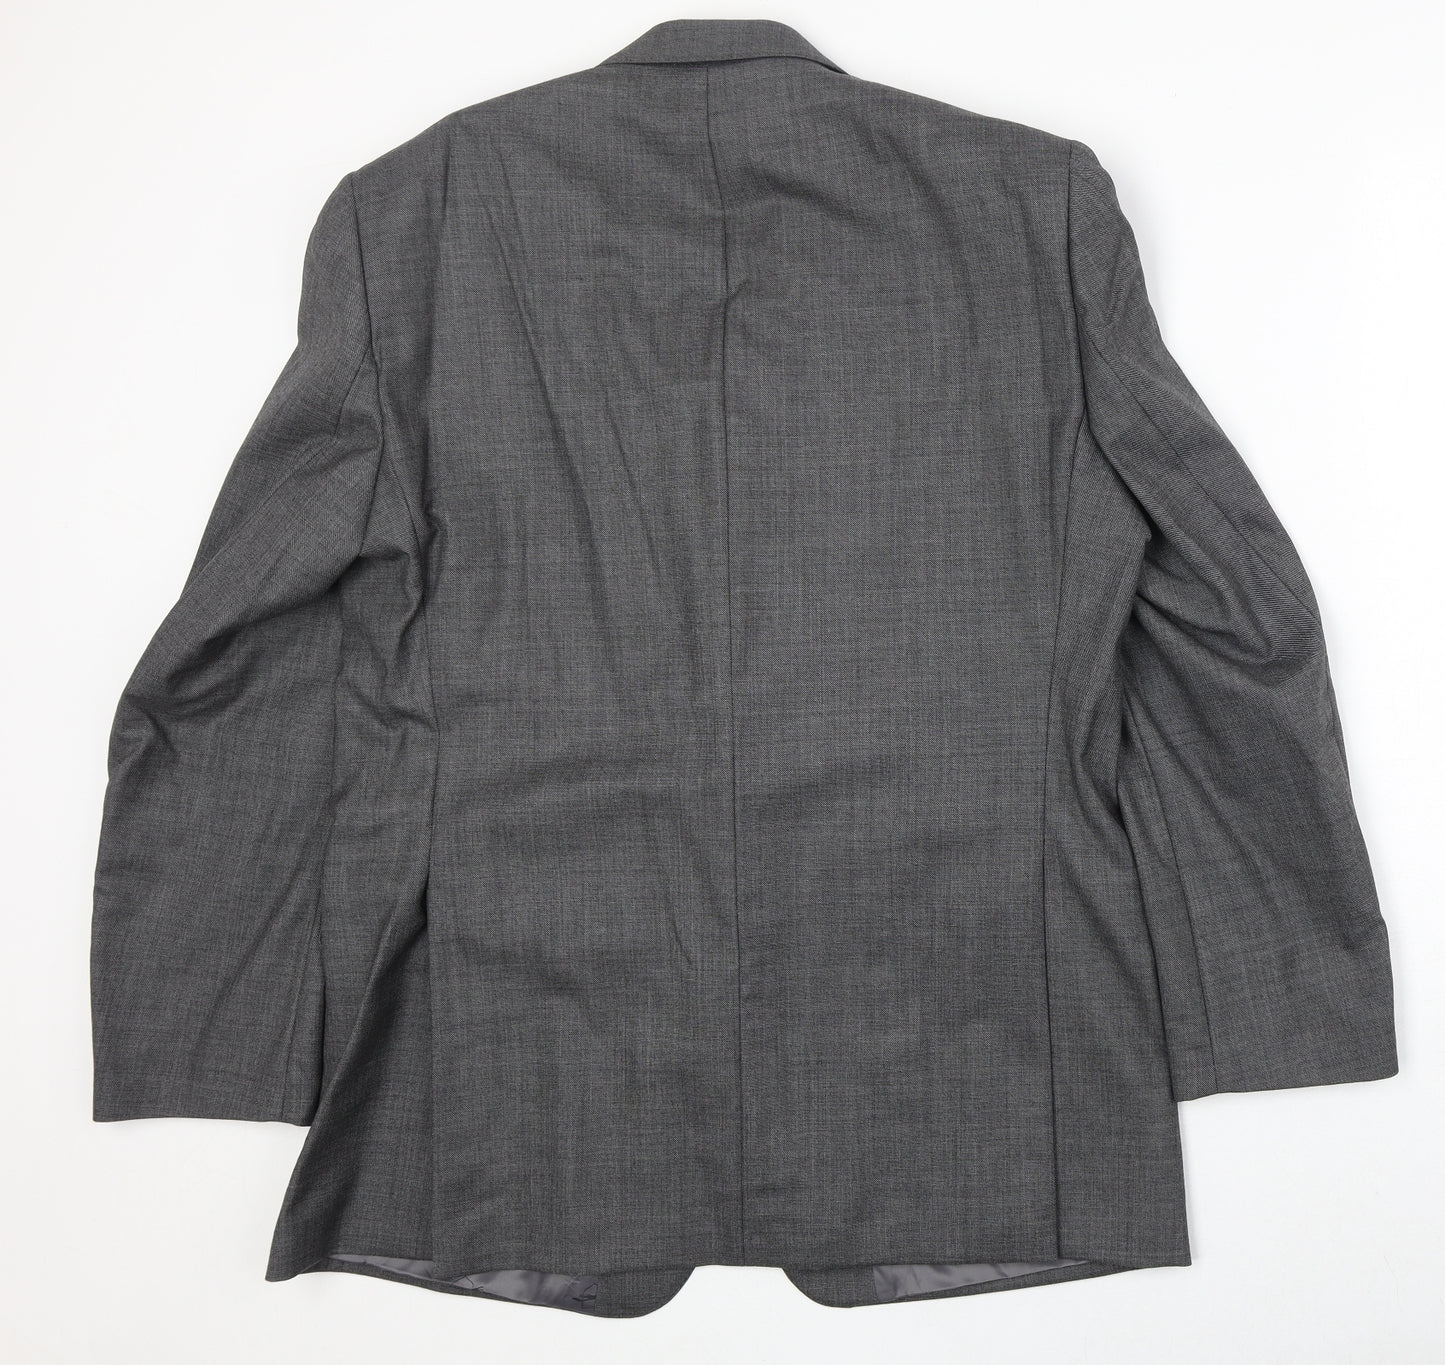 Paul Costelloe Mens Grey Wool Jacket Suit Jacket Size 42 Regular